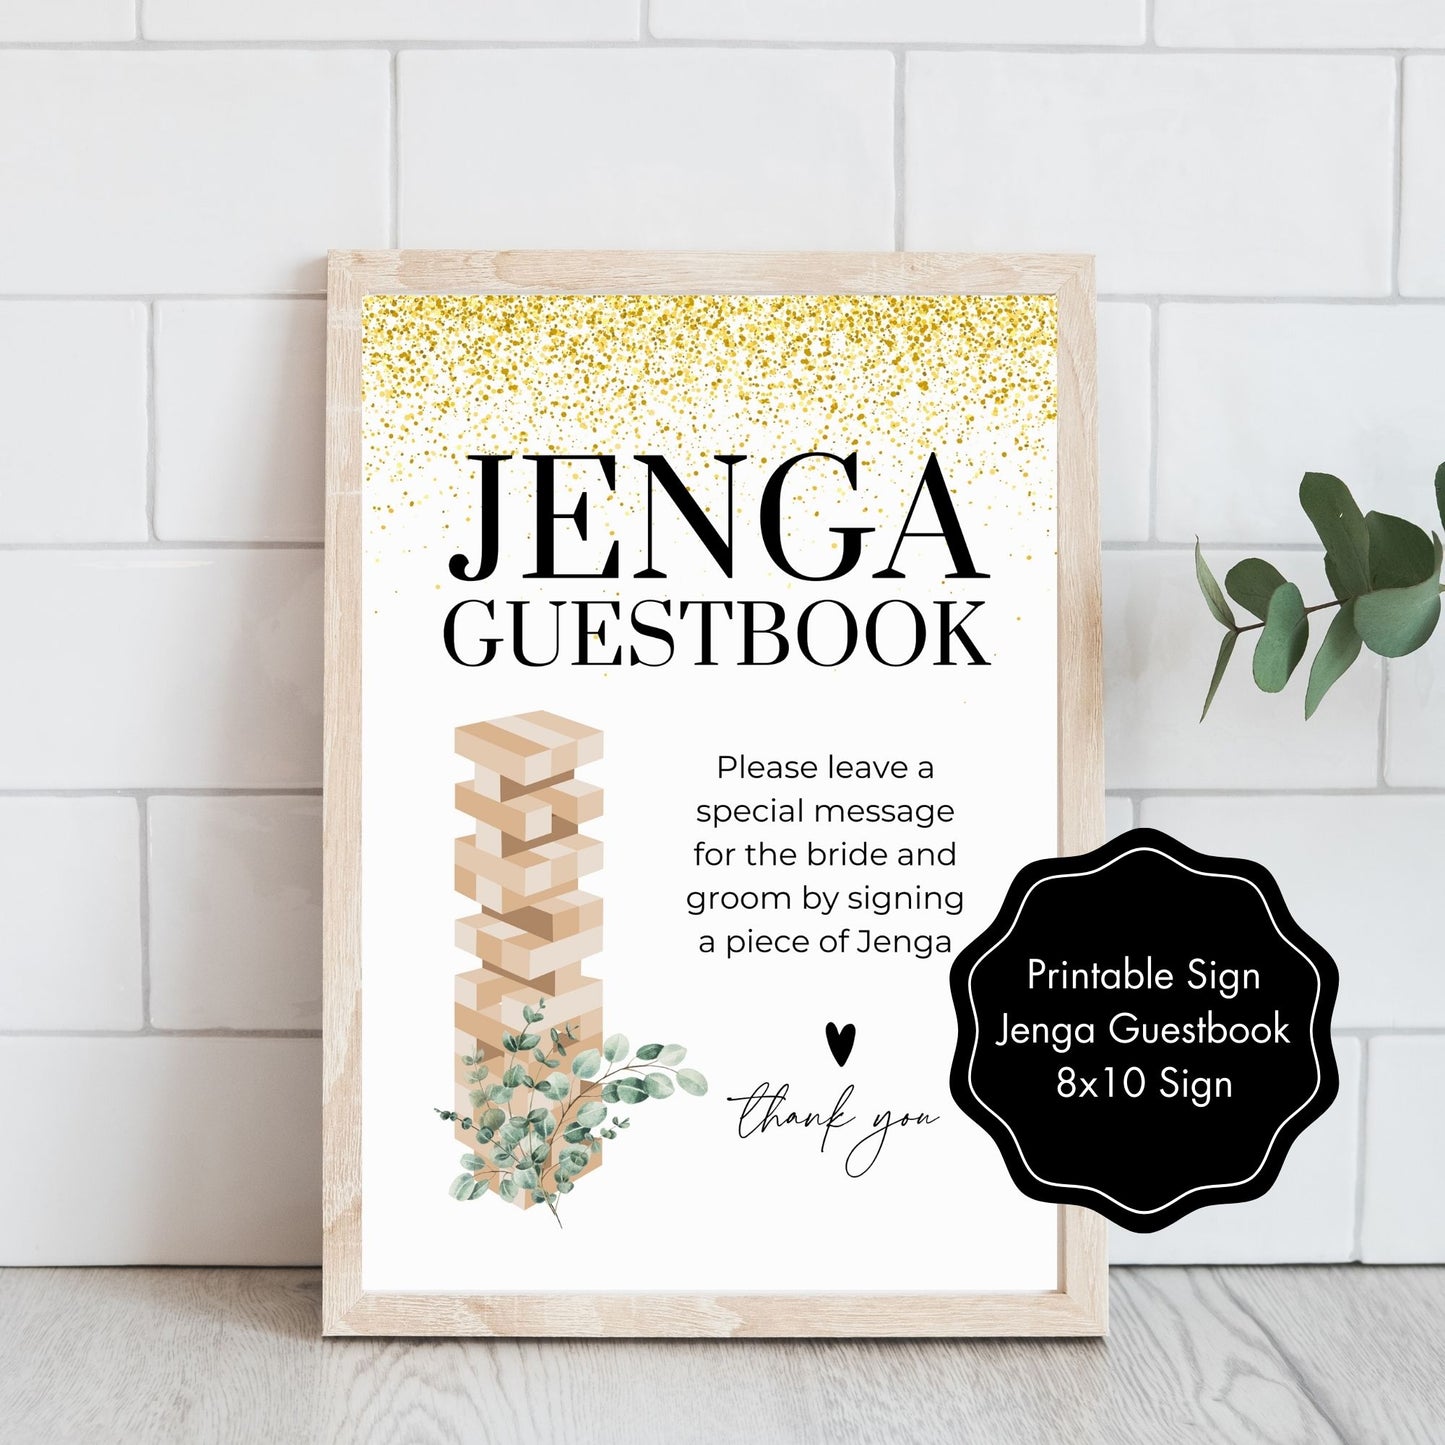 Jenga Guestbook Printable Sign 8x10